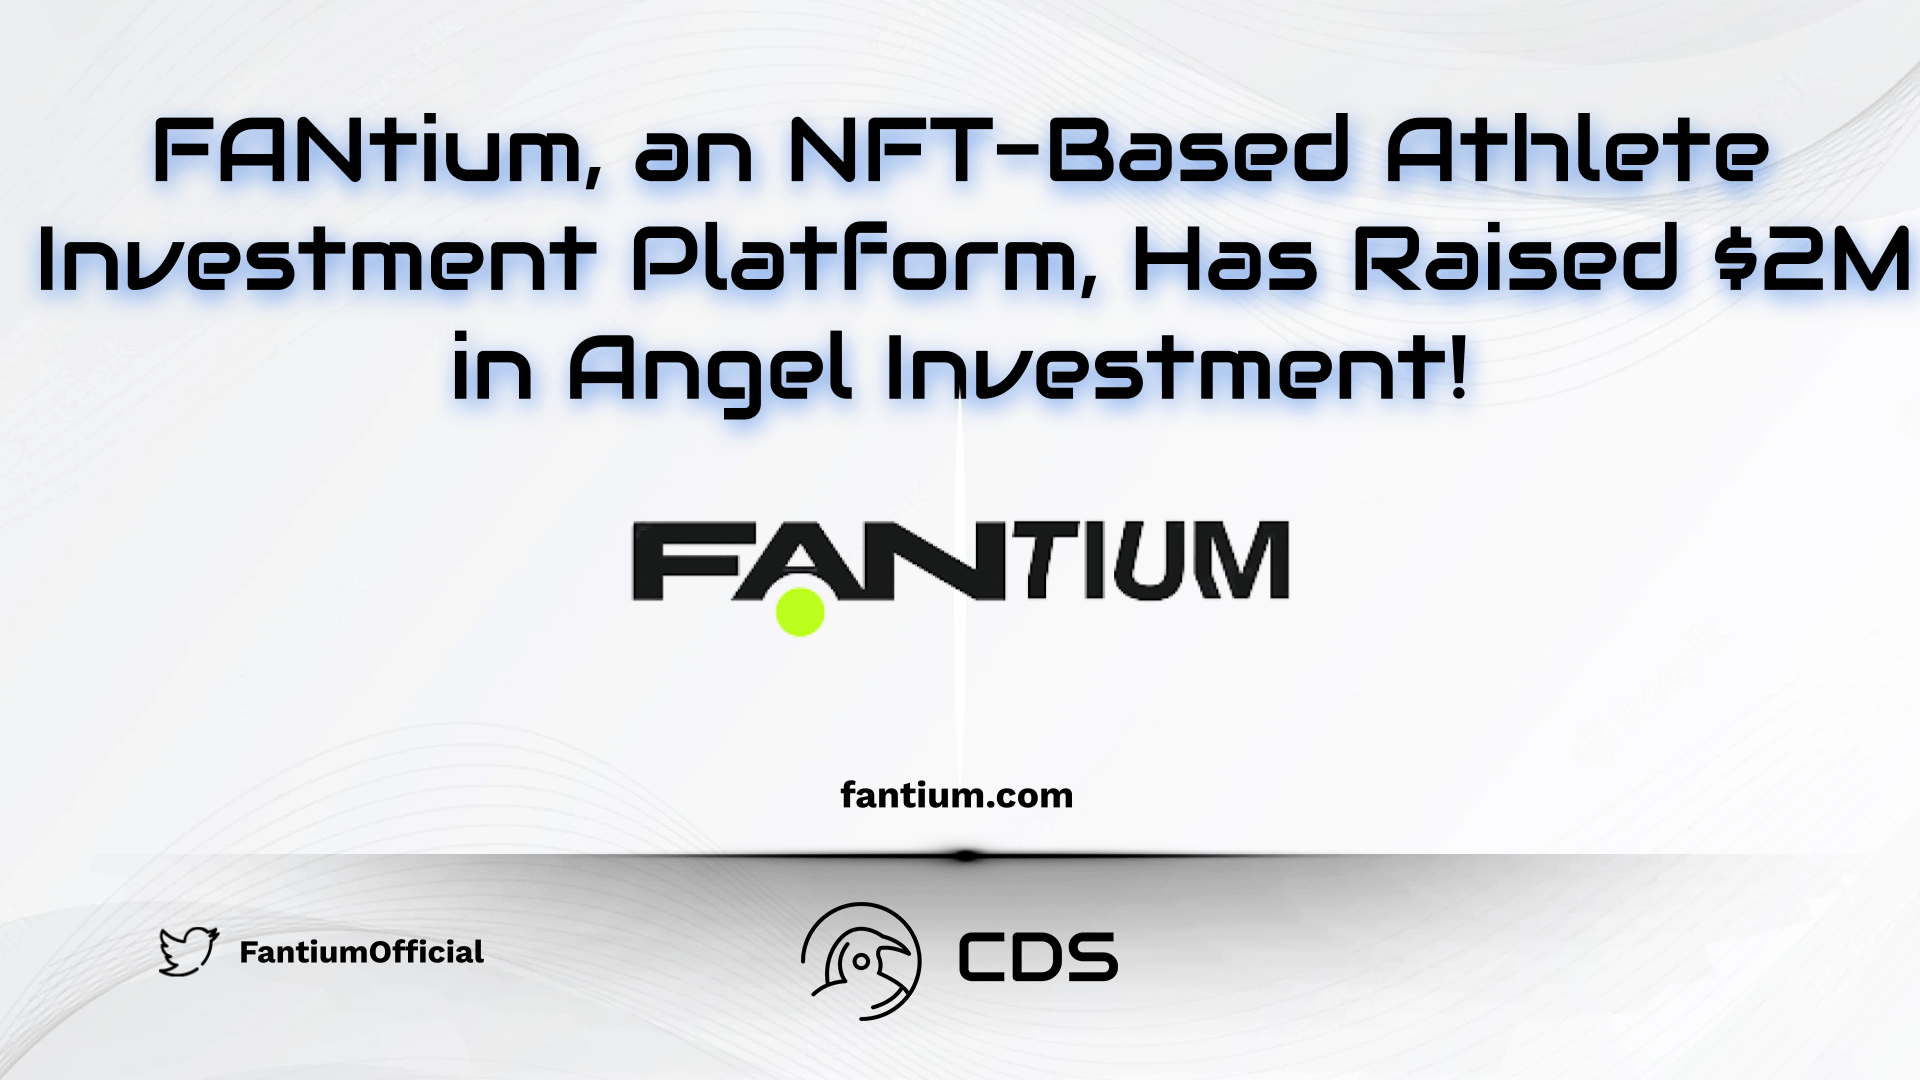 FANtium, an NFT-Based Athlete Investment Platform, Has Raised $2M in Angel Investment!